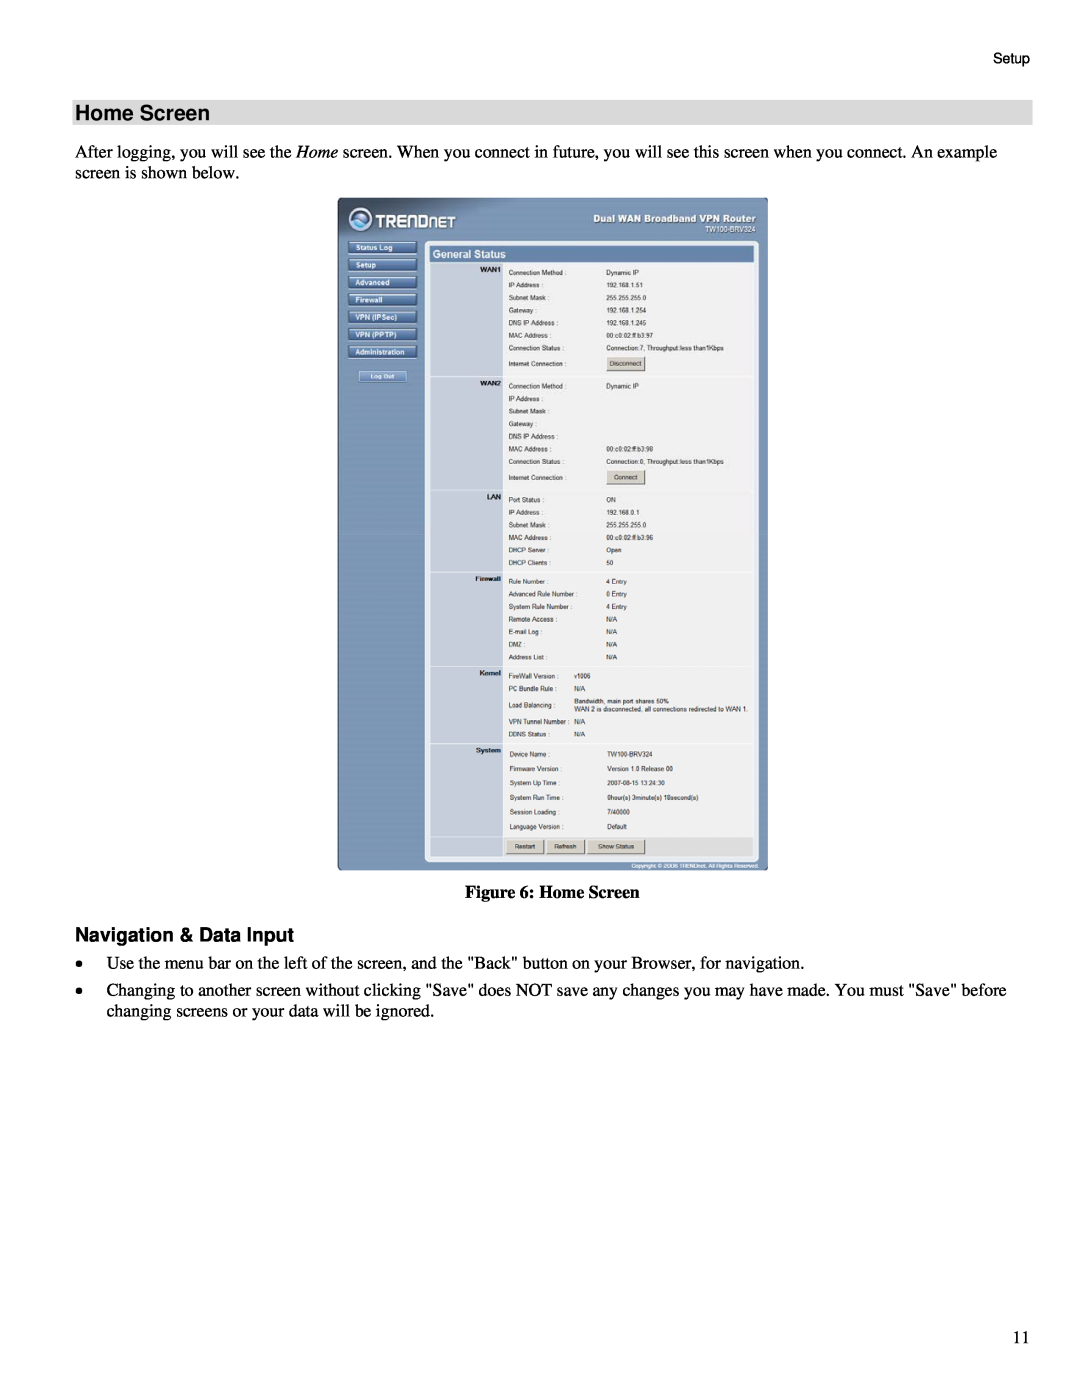 TRENDnet TW100-BRV324 manual Home Screen, Navigation & Data Input 